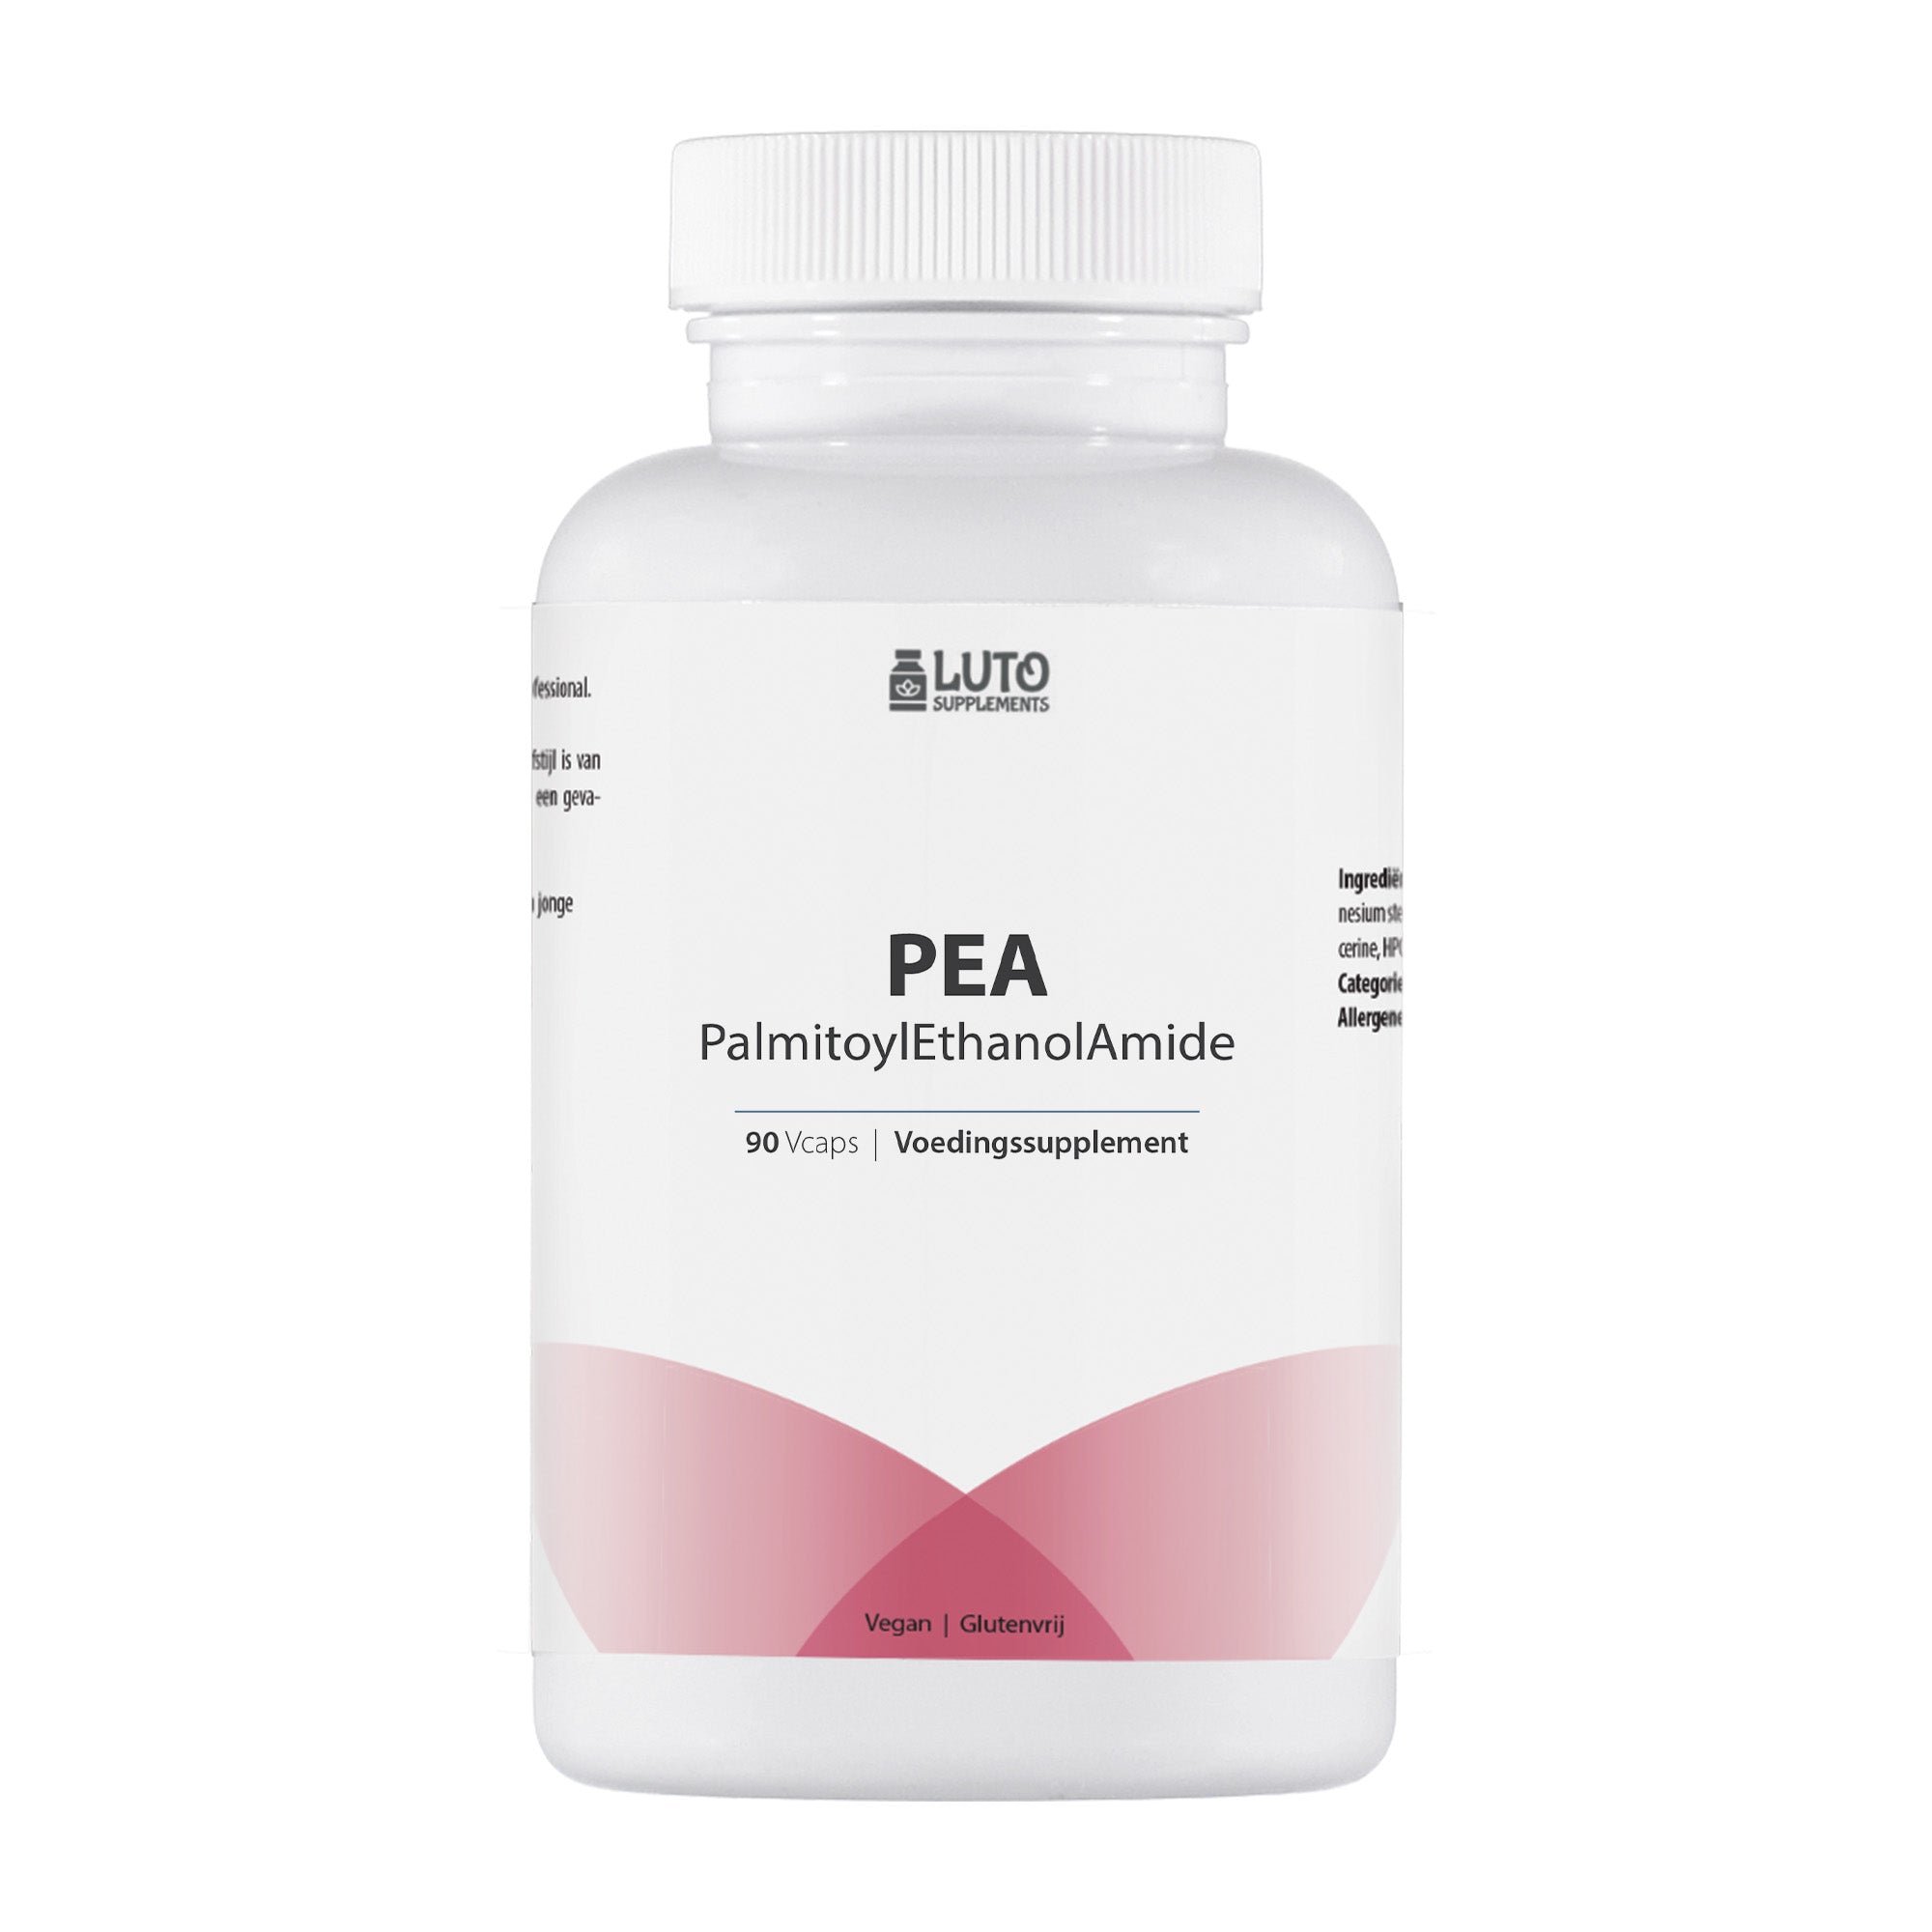 Zuivere PEA - Palmitoylethanolamide - 1200mg - 90 Vegetarische capsules - Hoge kwaliteit - LUTO Supplements